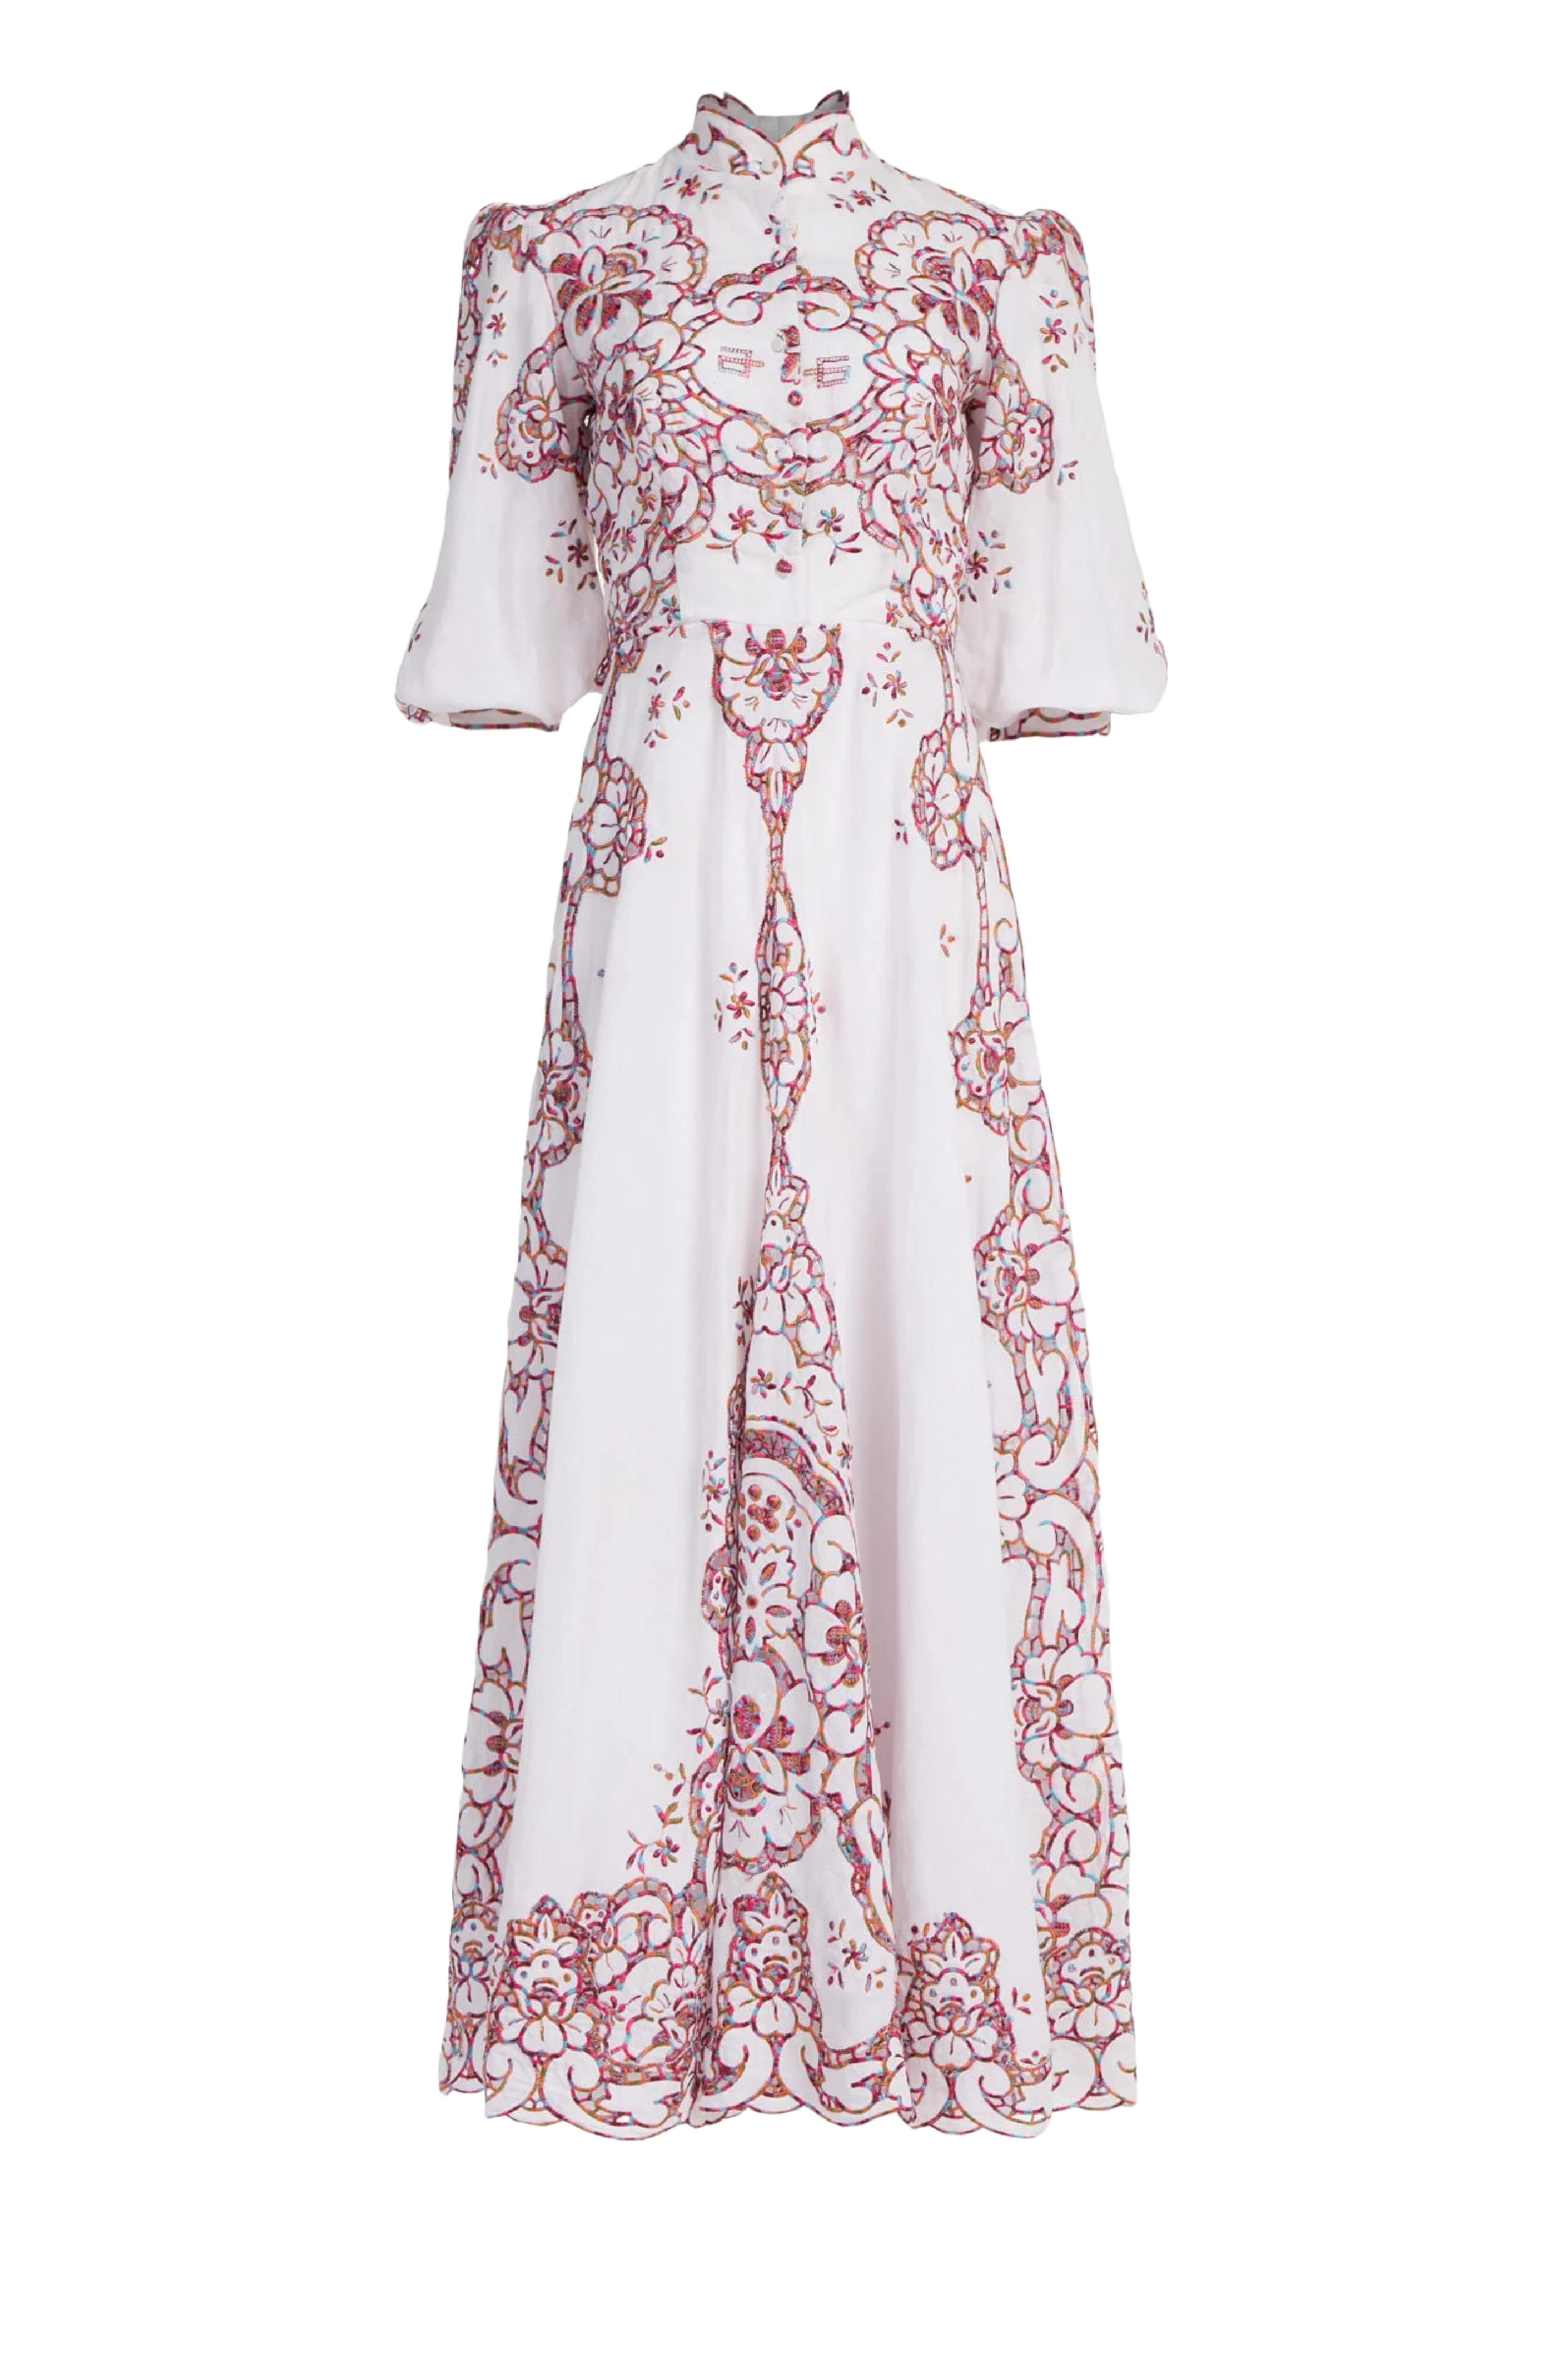 Iris Reticella Dress